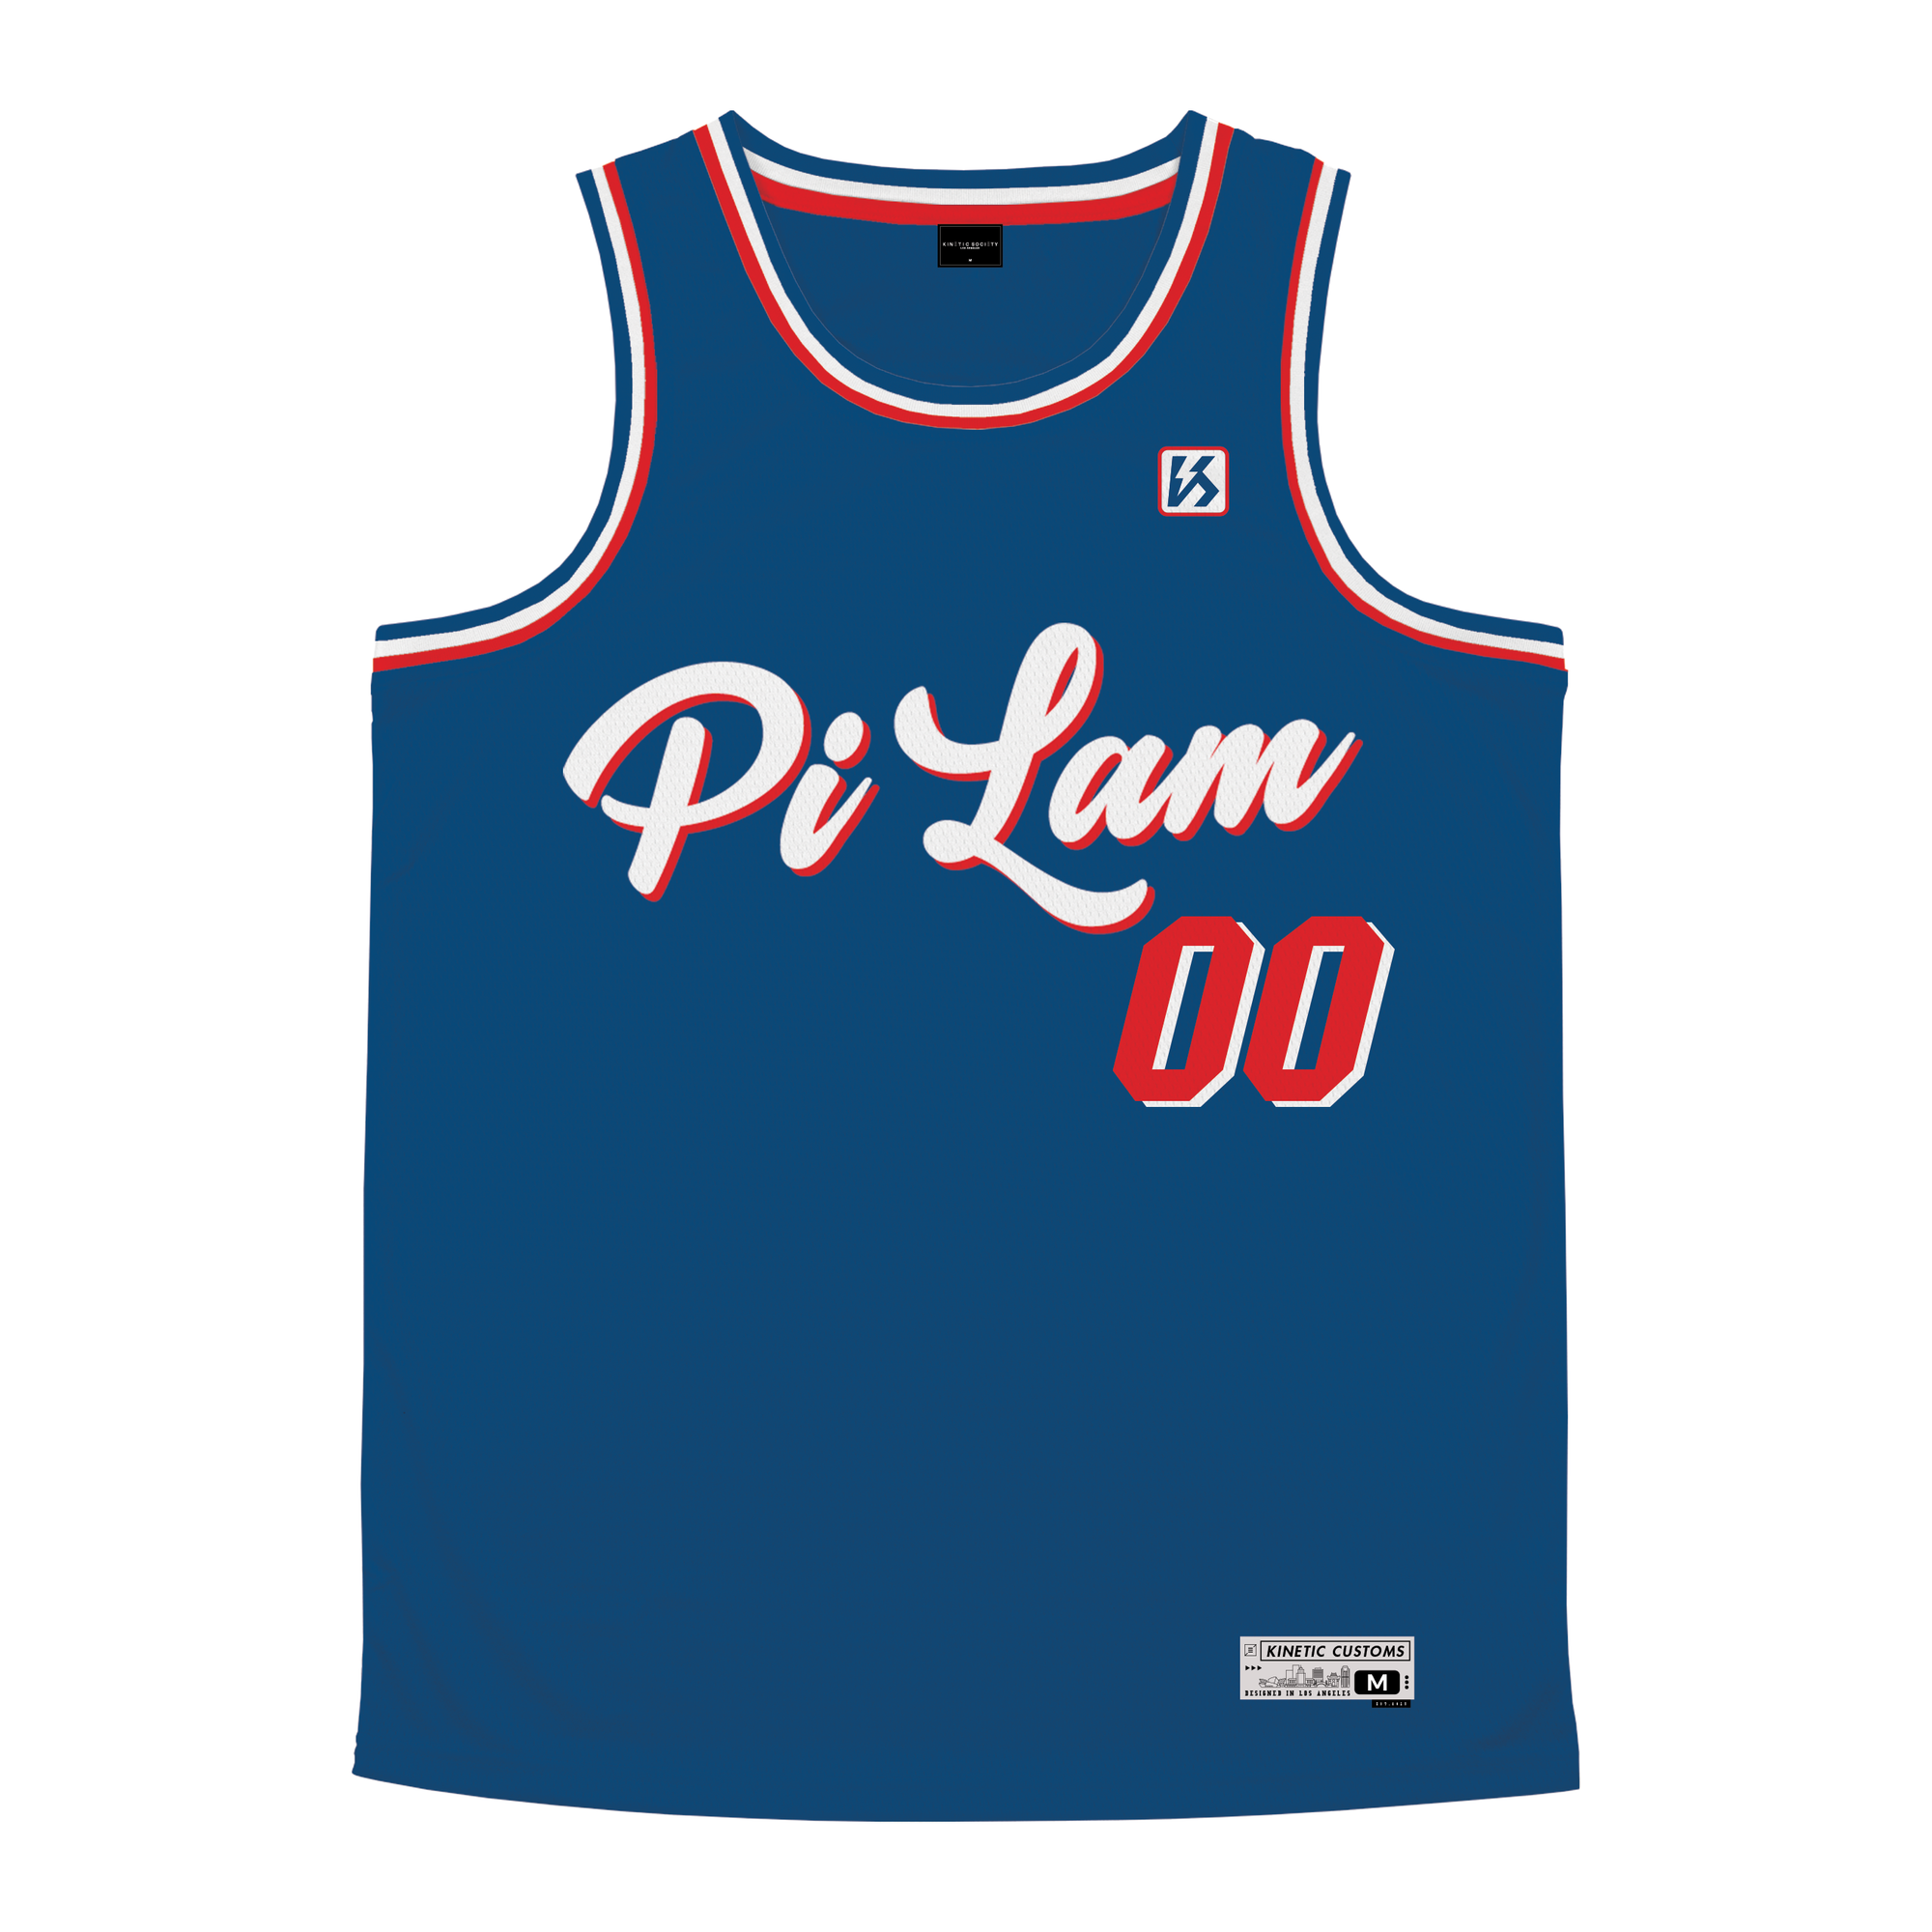 Pi Lambda Phi - The Dream Basketball Jersey